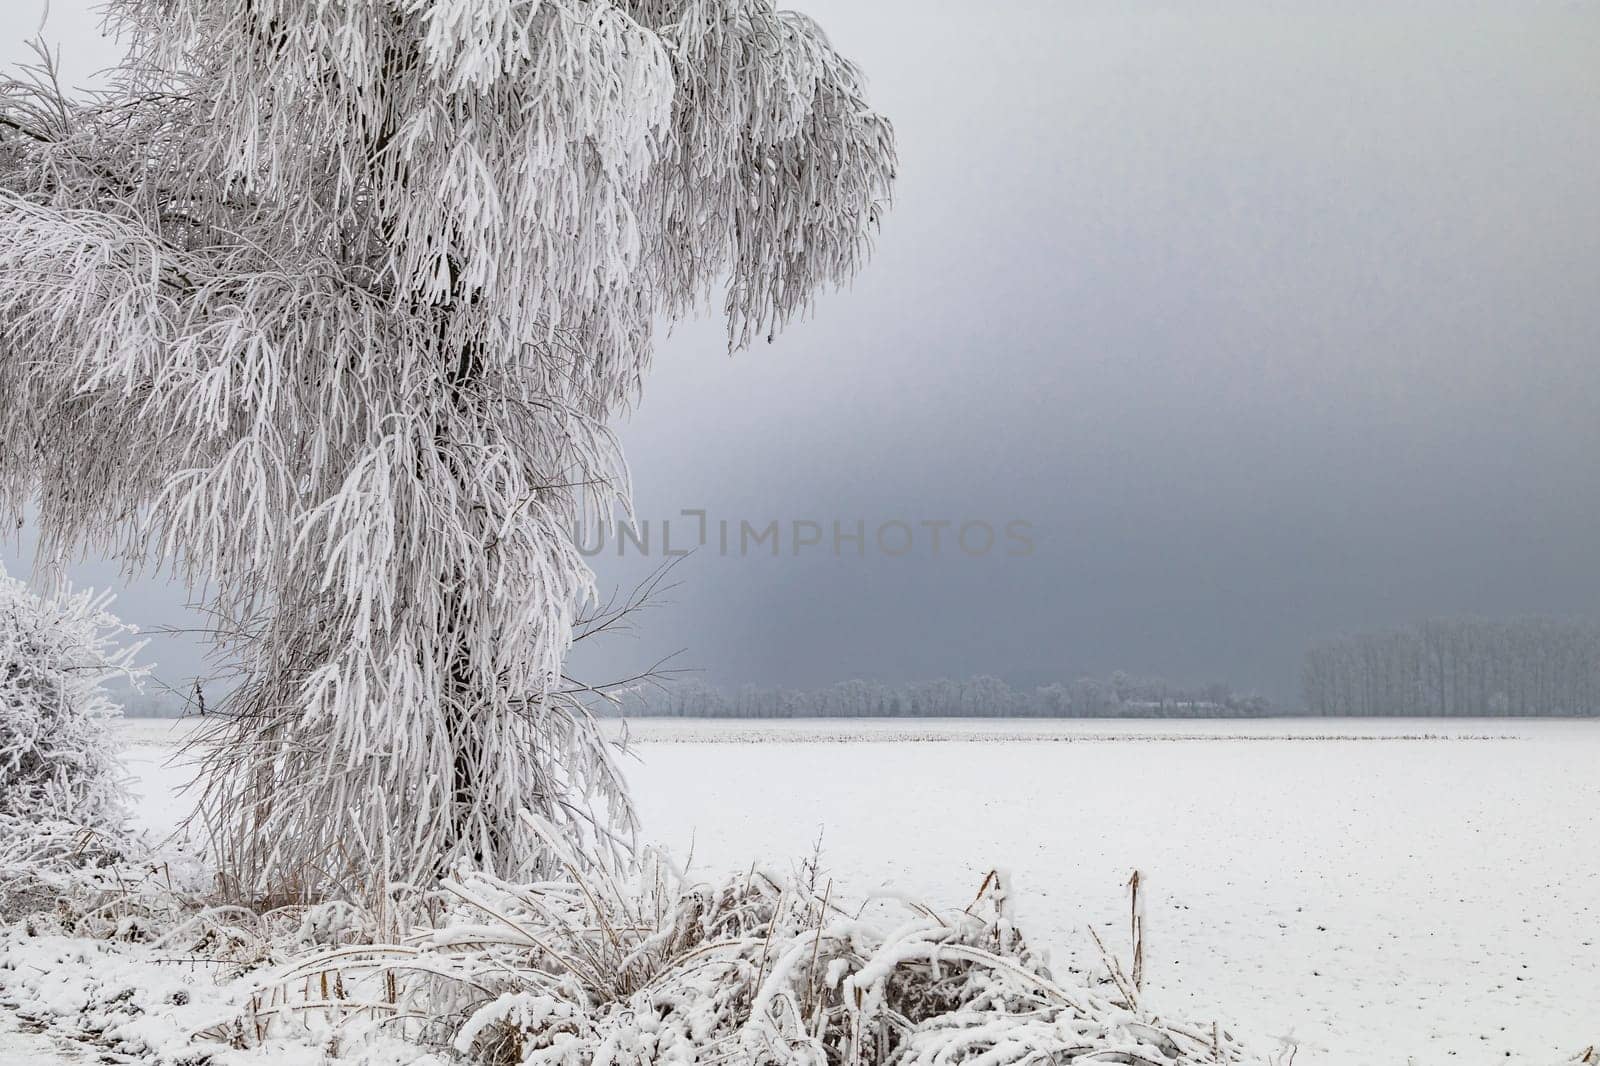 Beautifully iced tree in snowy landscape in winter, Germany by astrosoft